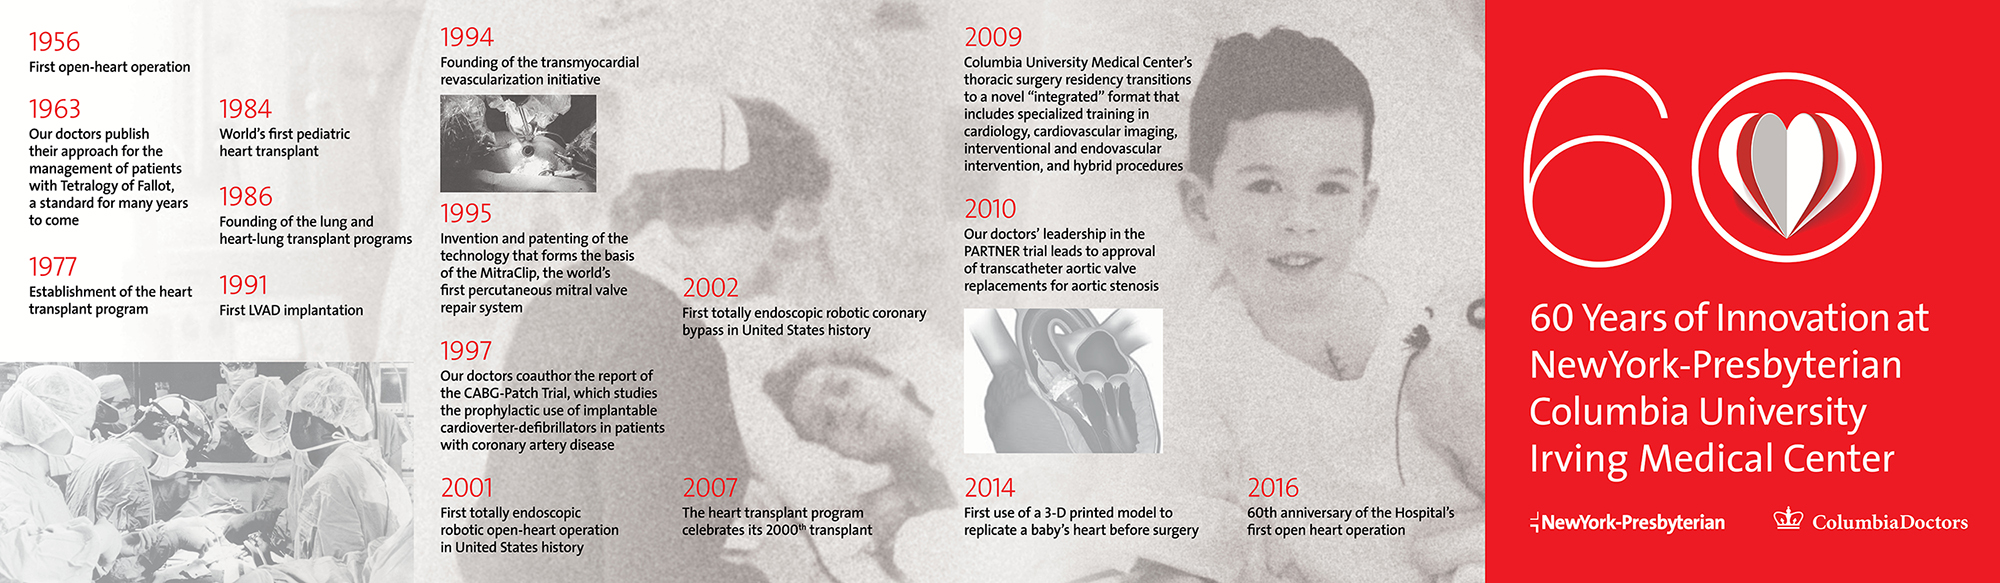 60th Anniversary of Cardiac Surgery Celebrated at NewYork-Presbyterian/Columbia University Medical Center